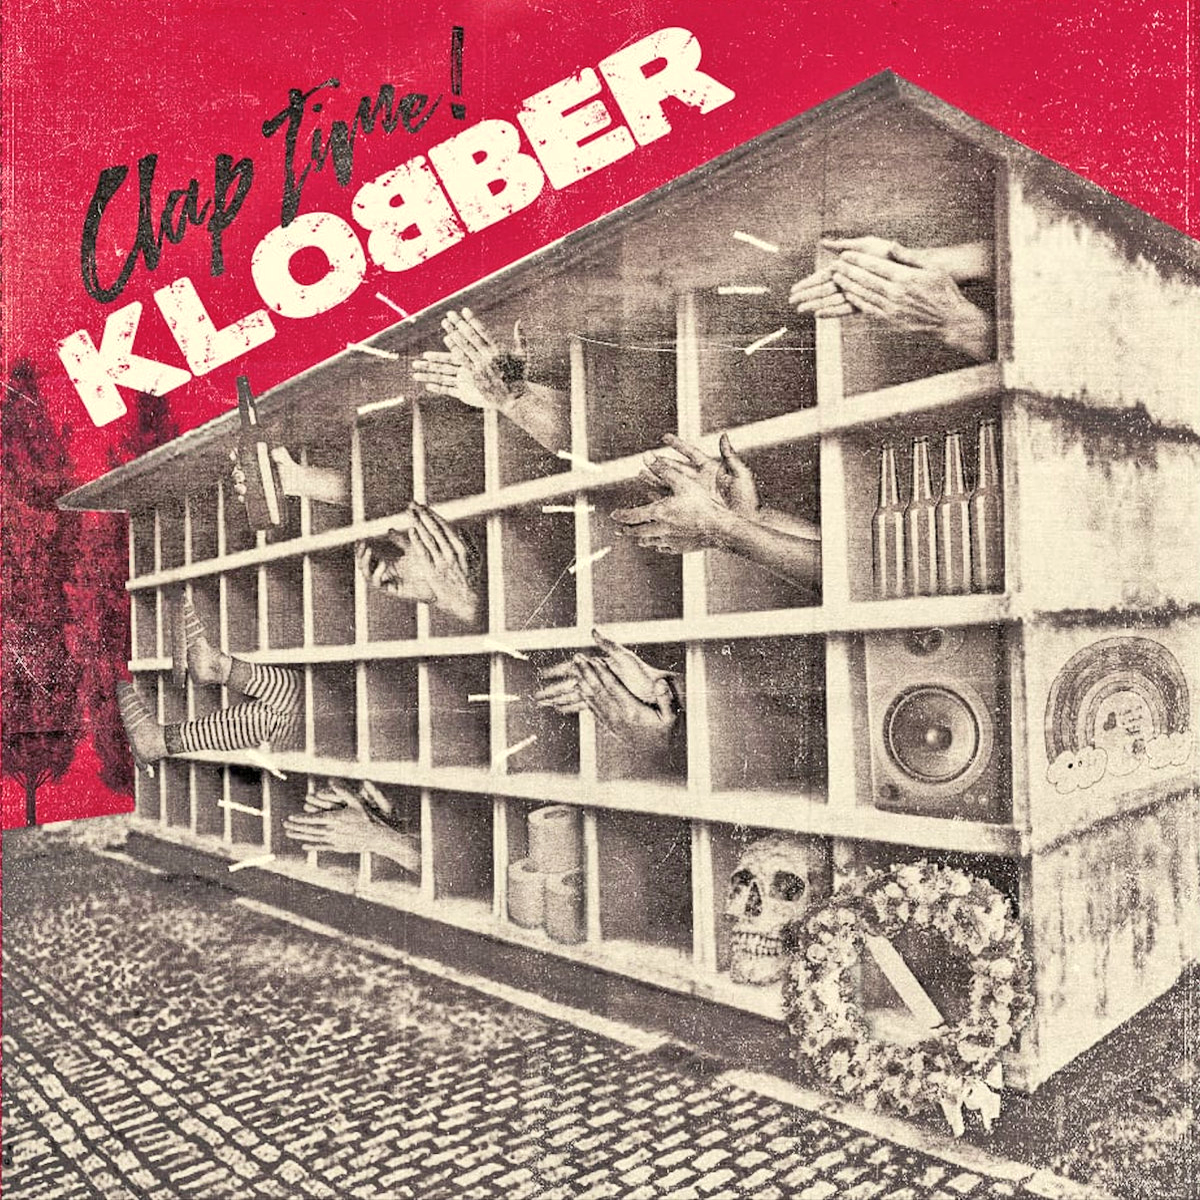 Klobber- Clap Time LP ~ELECTRIC FRANKENSTEIN / RARE RED WAX LTD TO 100!